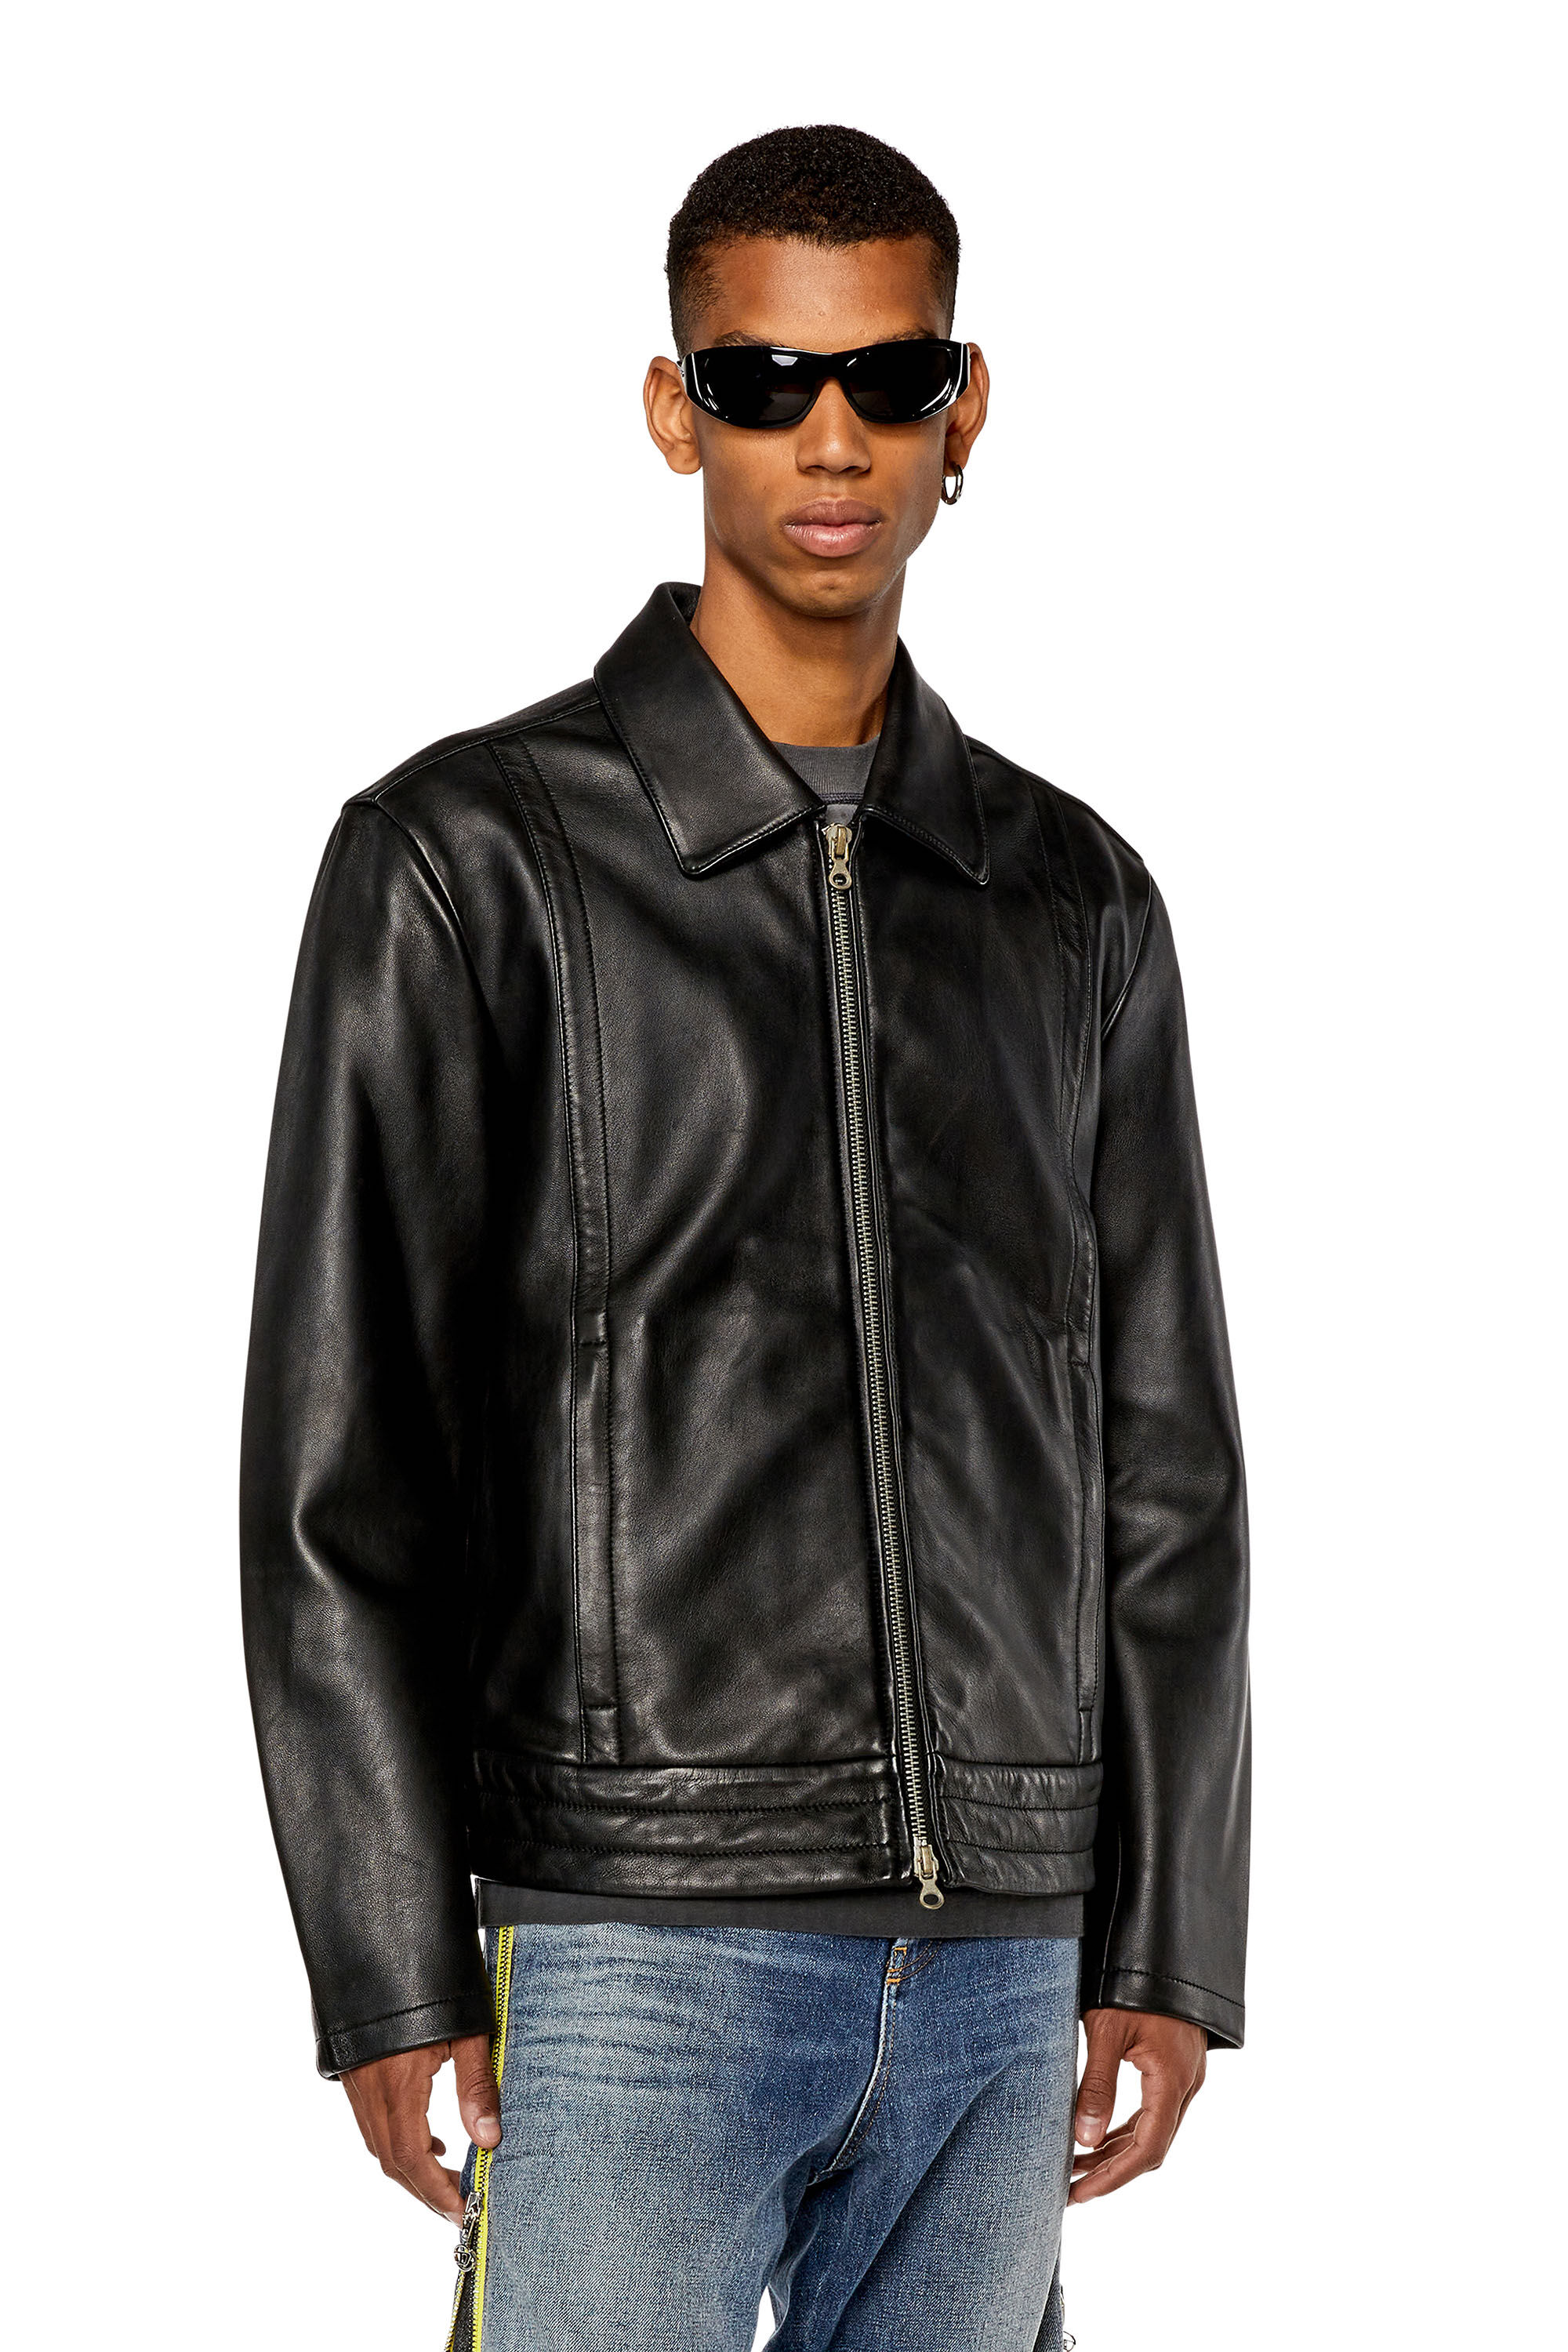 Diesel - L-HUDSON, Man Shirt jacket in supple leather in Black - Image 3